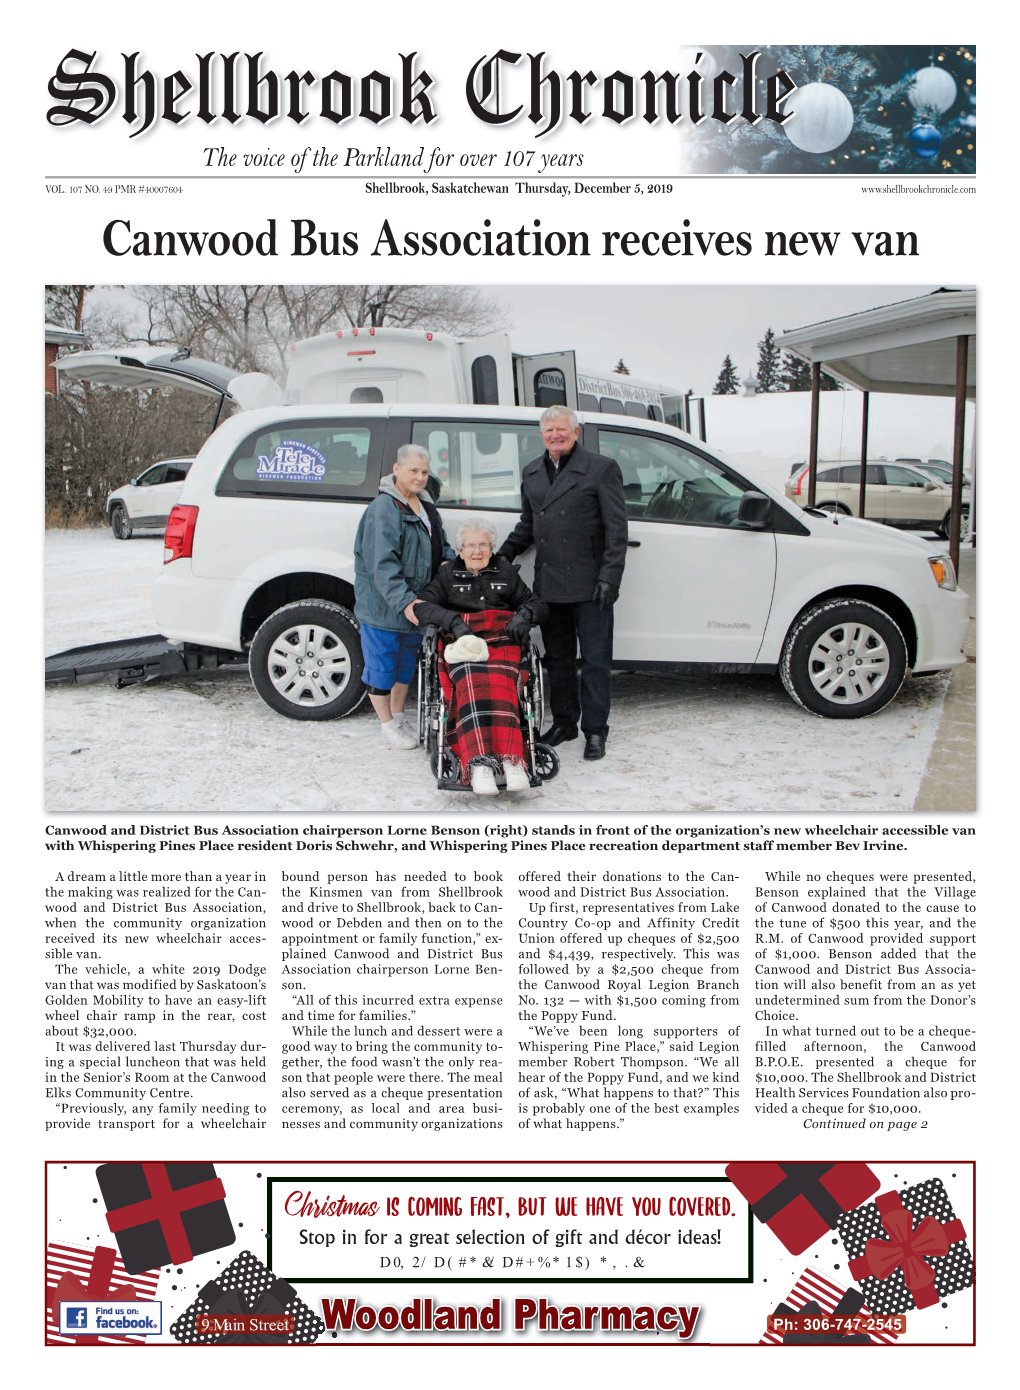 Canwood Bus Association Receives New Van